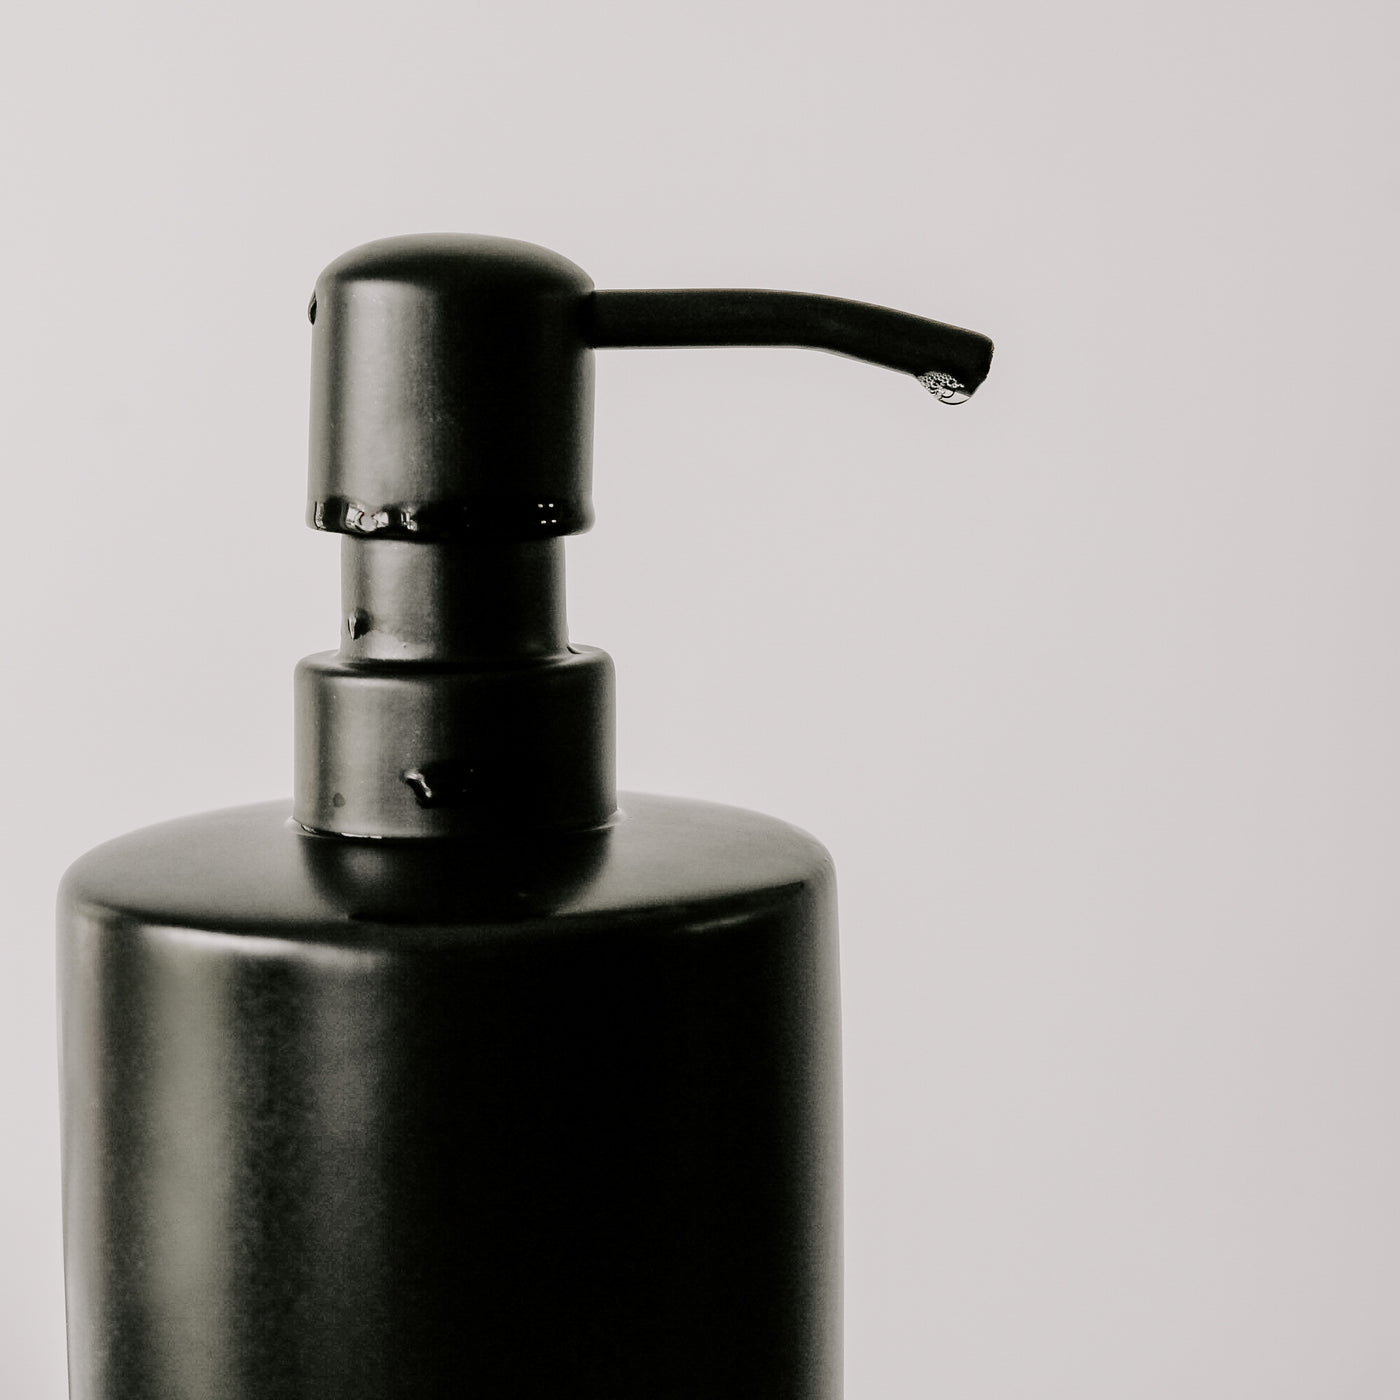 15oz Black Stoneware Dish Soap Dispenser - Sweet Water Decor - Dispensers